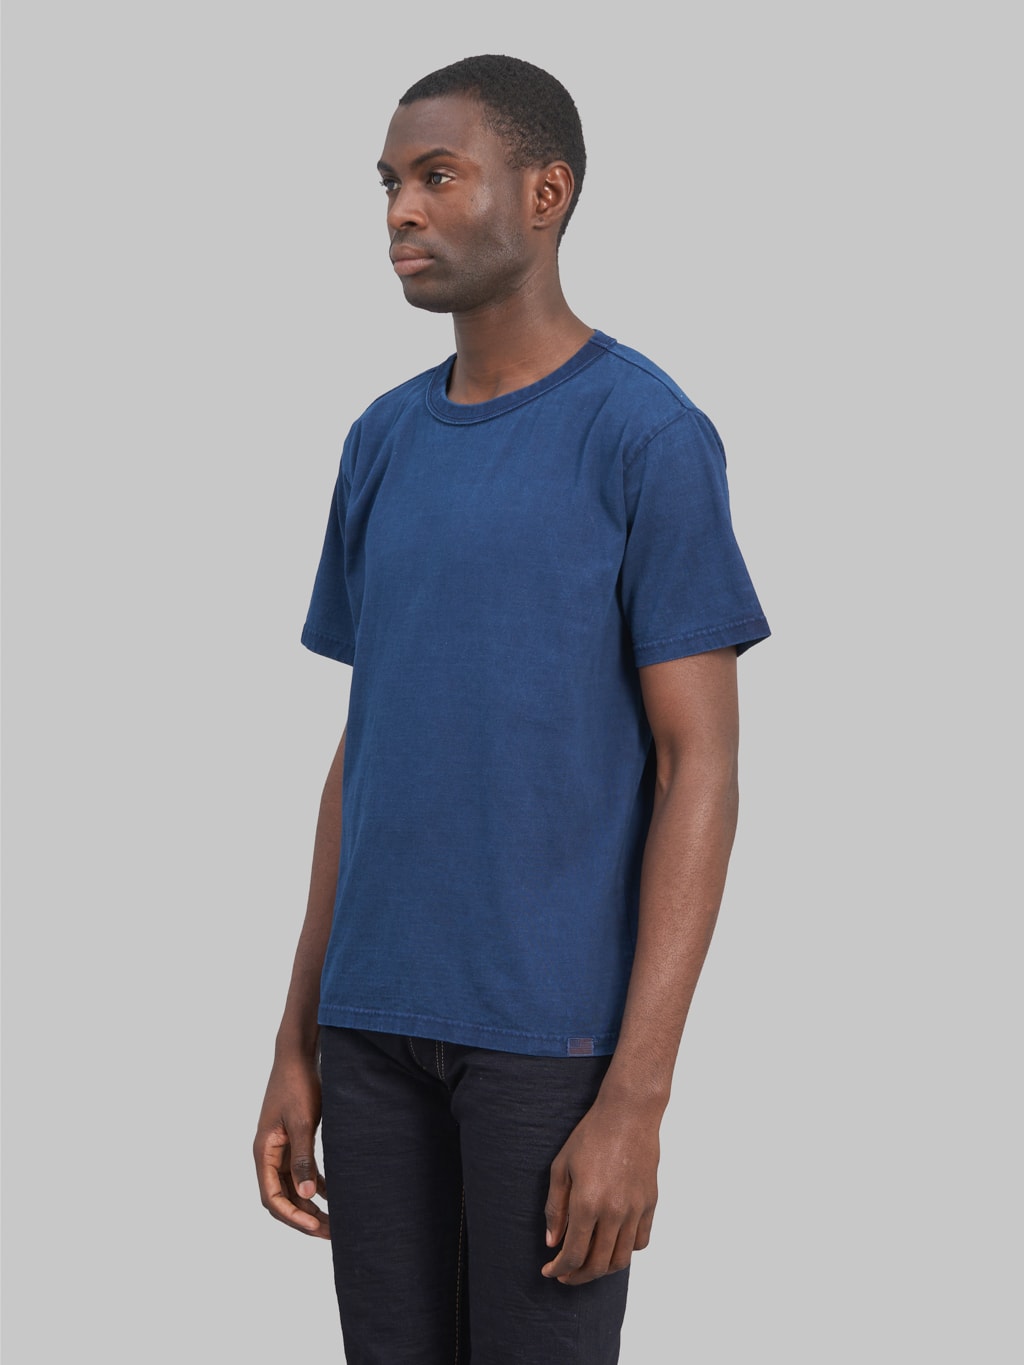 Studio D'Artisan 8136B USA Cotton T-Shirt Light Indigo